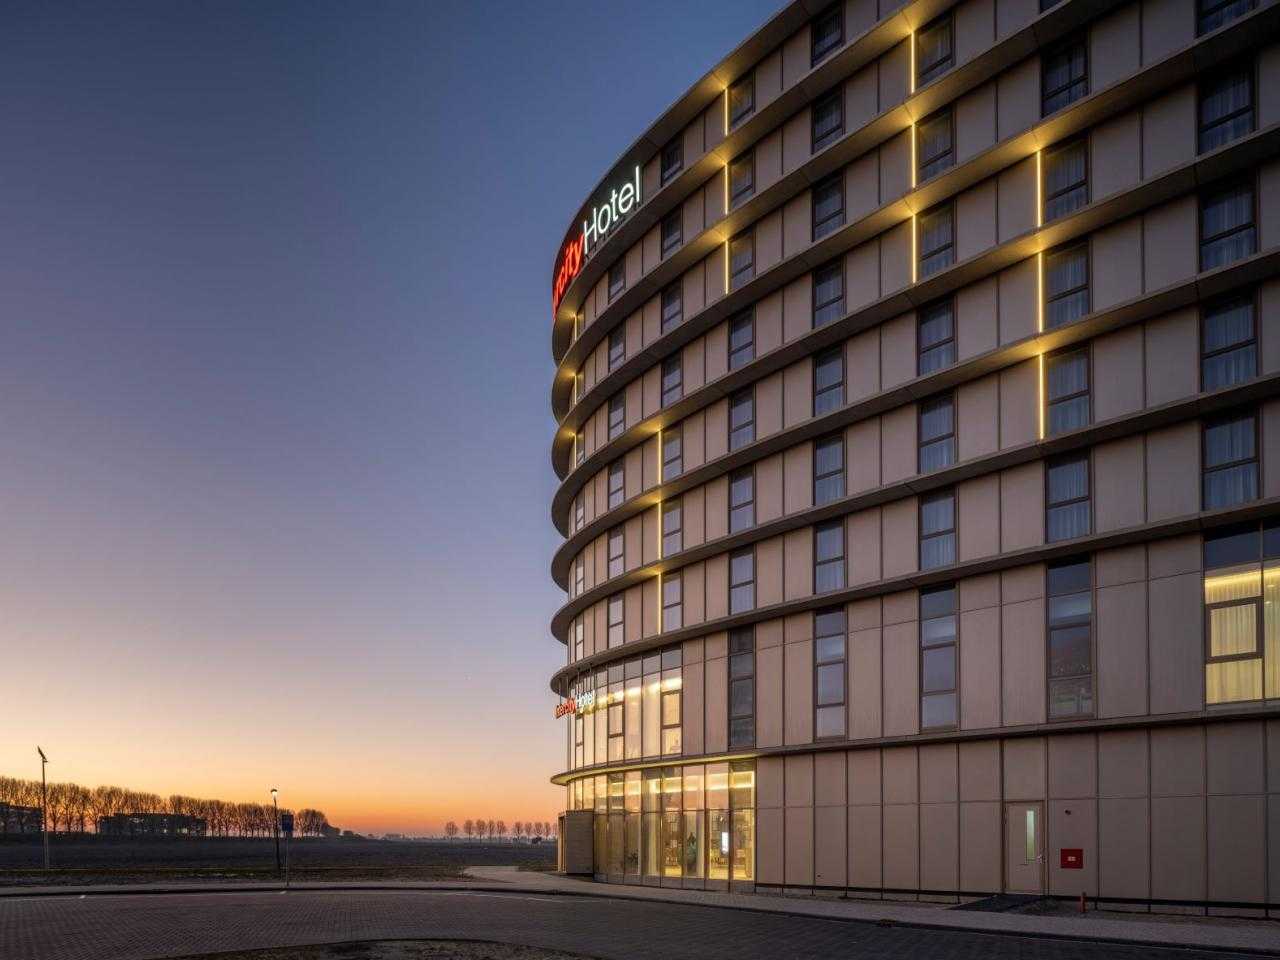 Intercity Hotel met zonsondergang